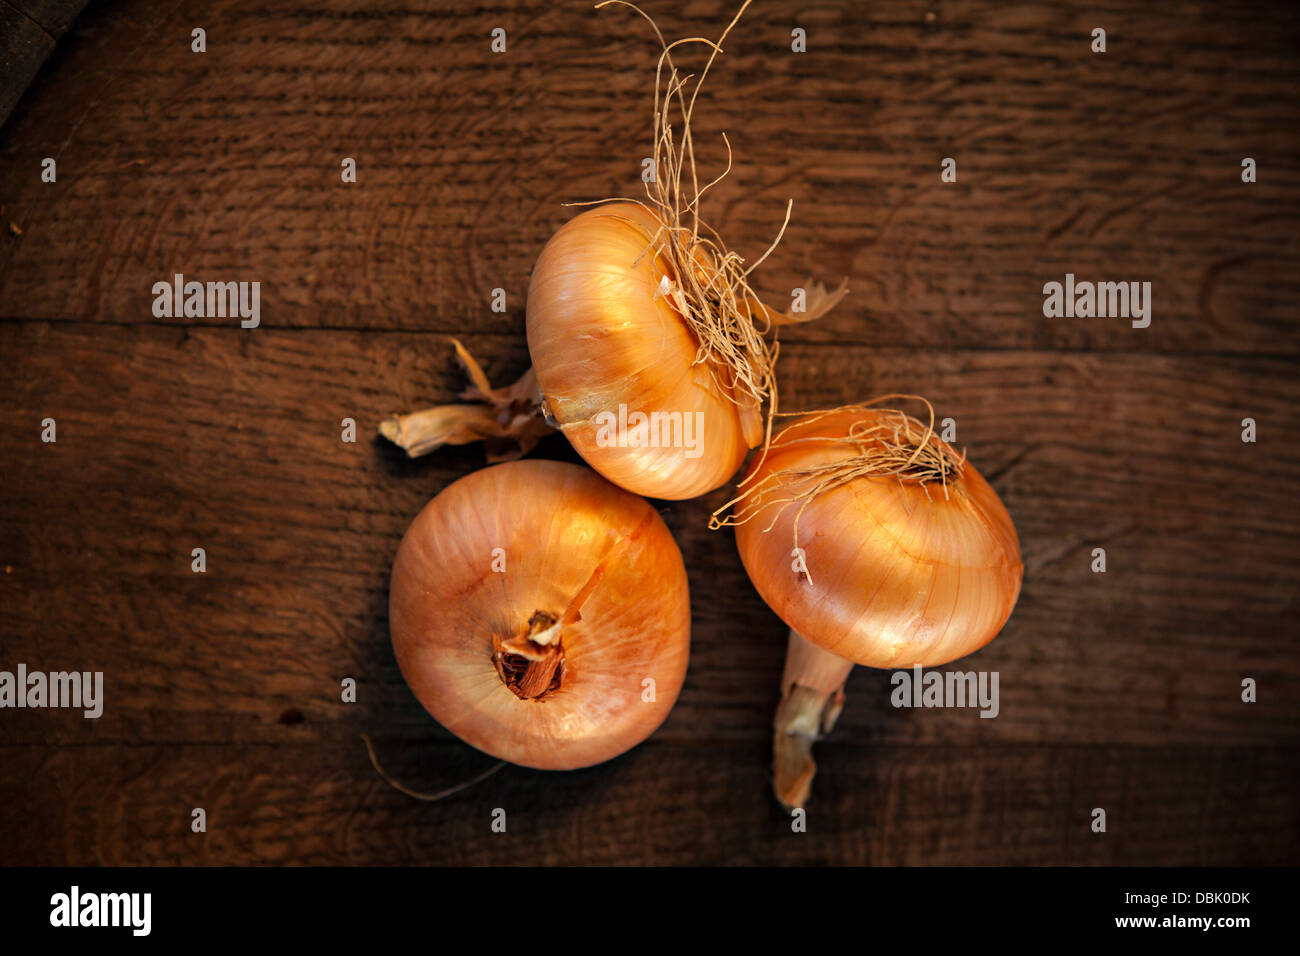 Three Onions On Wooden Table, Croatia, Slavonia, Europe Stock Photo